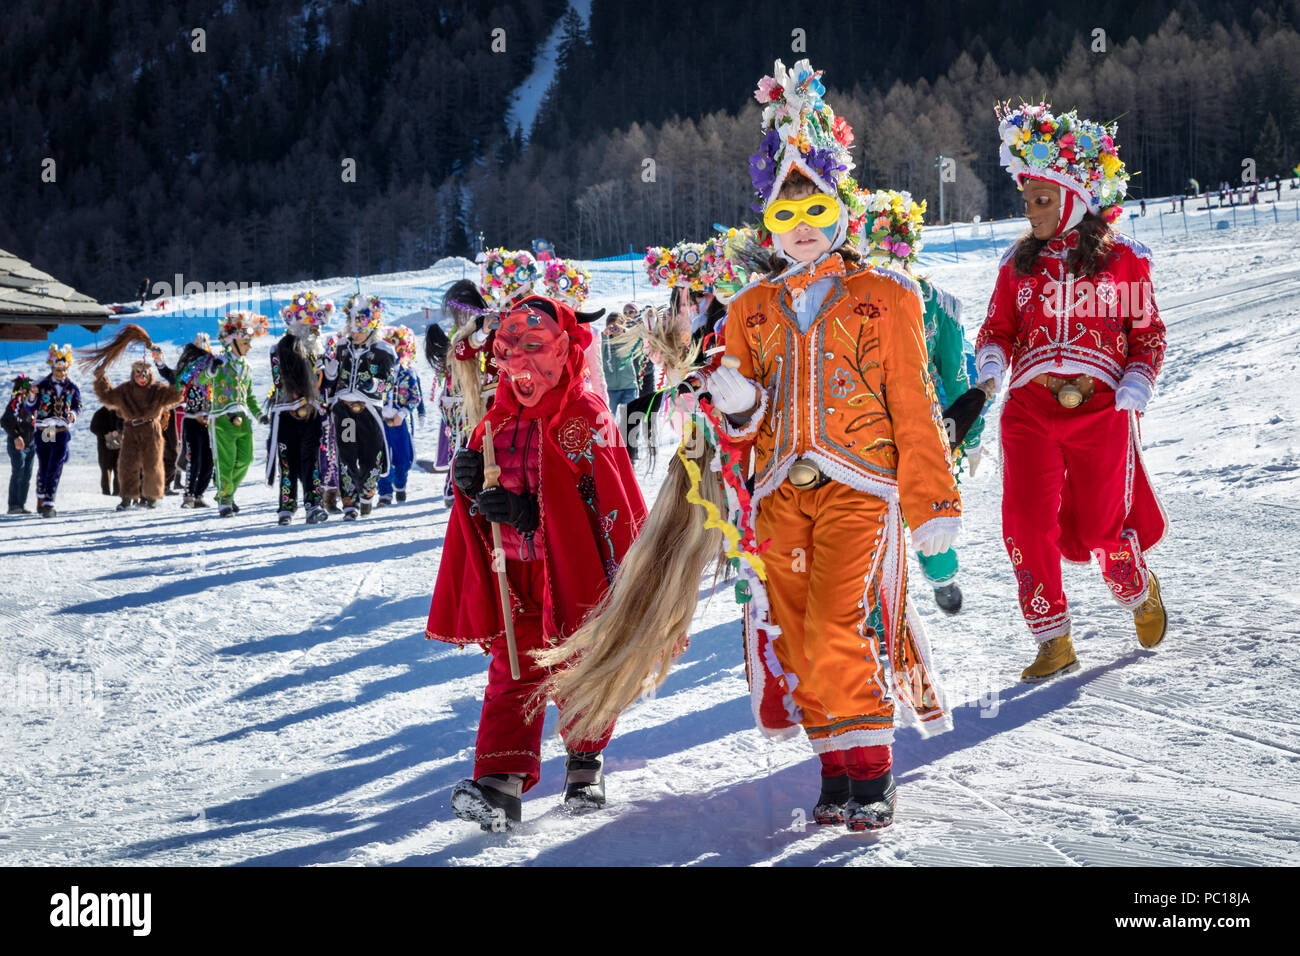 Coumba Freida Carnaval, près de Cerisey, vallée du Grand-Saint-Bernard, Aoste, Italie Banque D'Images